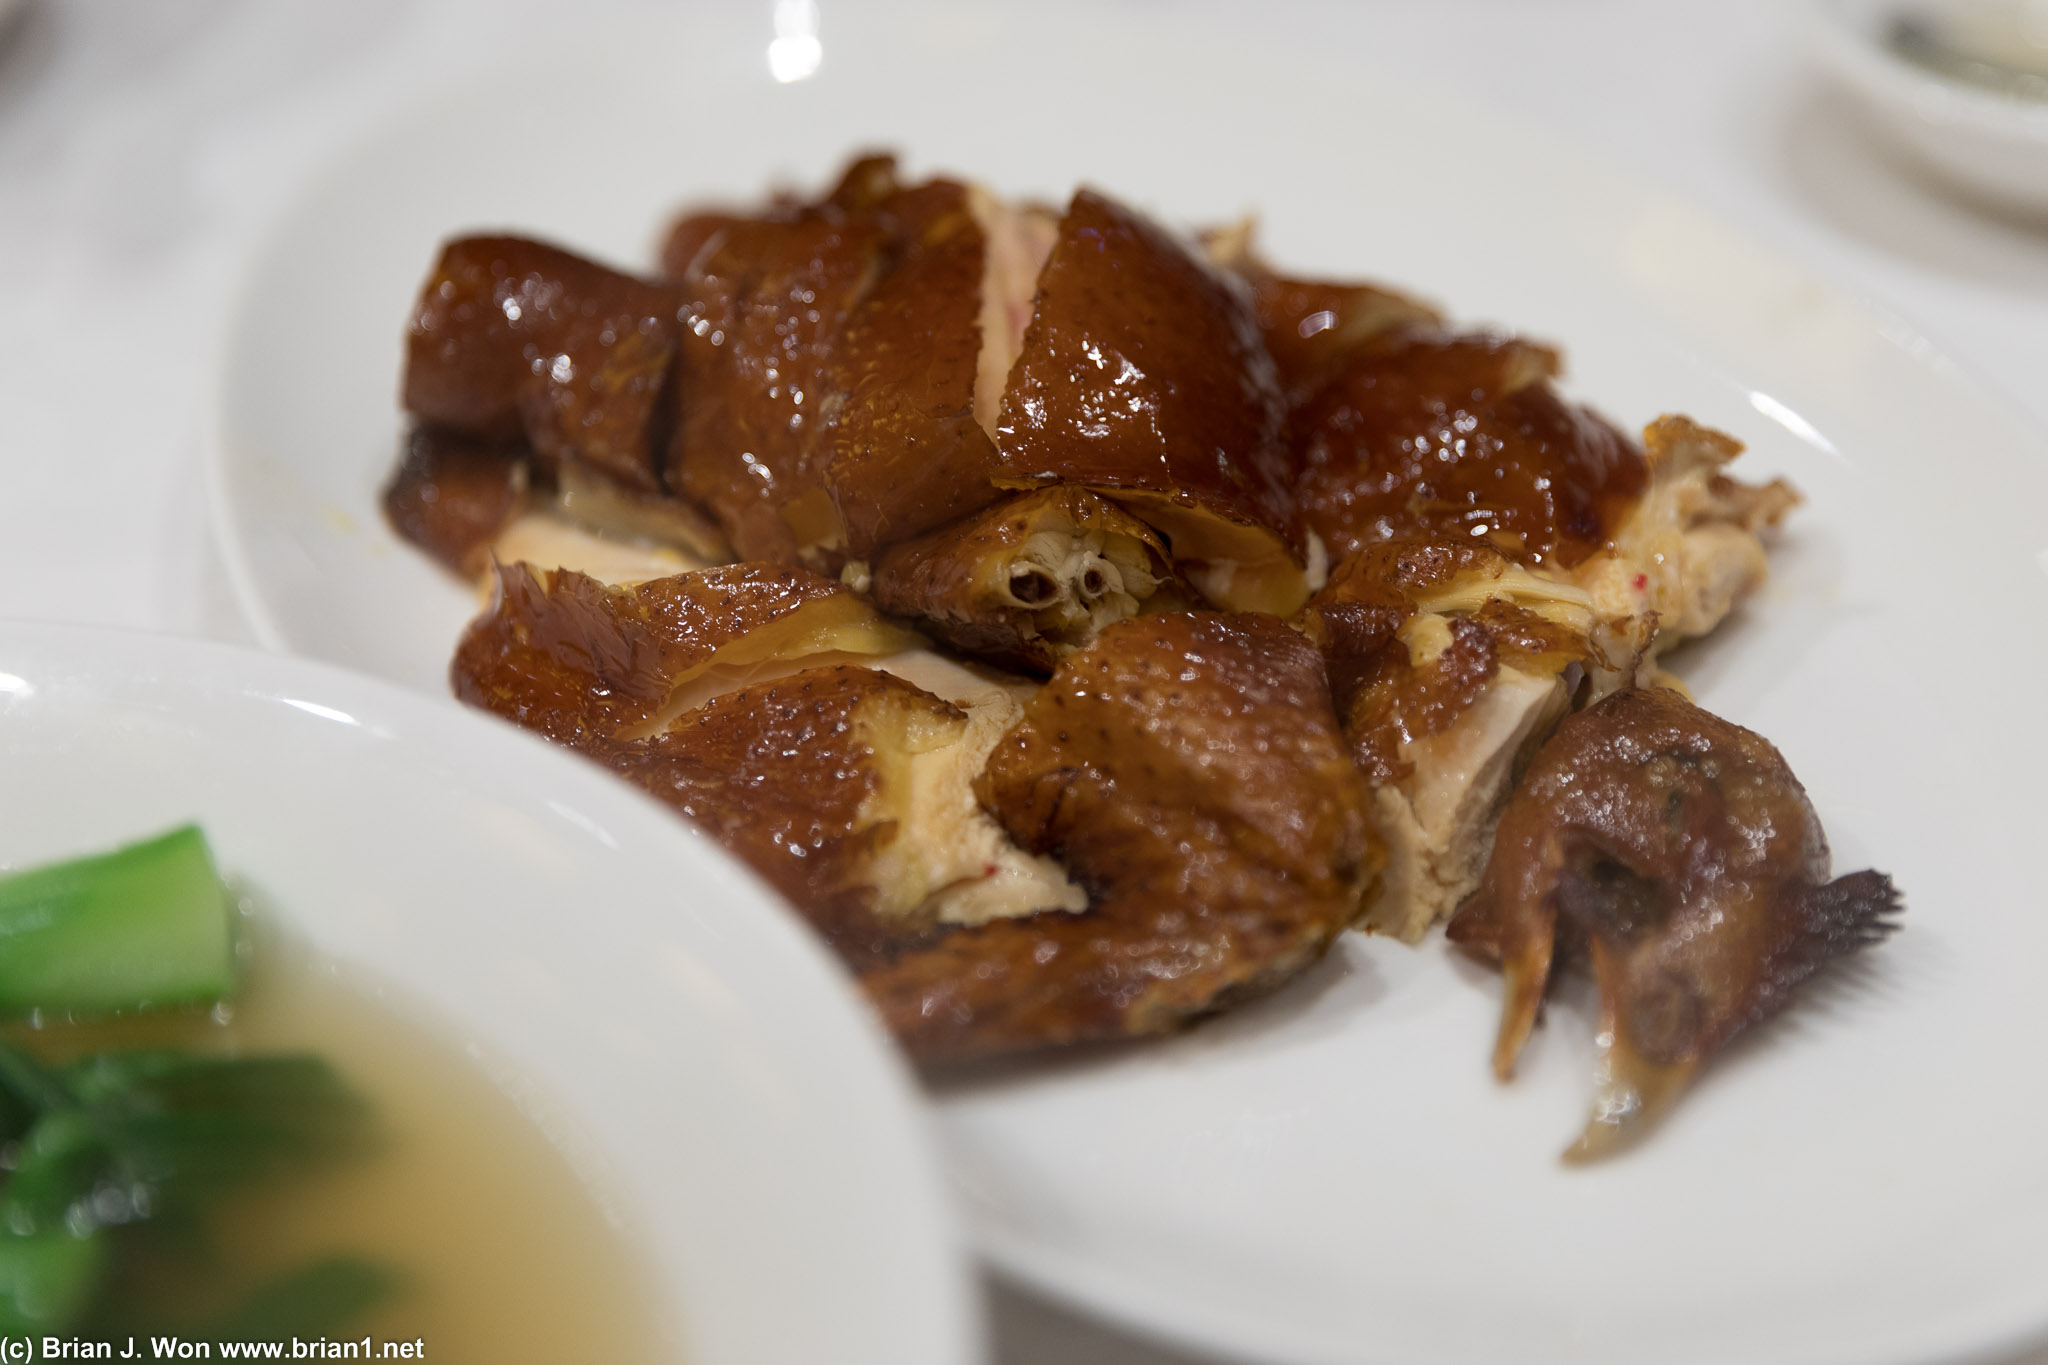 Crispy chicken at Fook Lam Moon was REALLY GOOD.